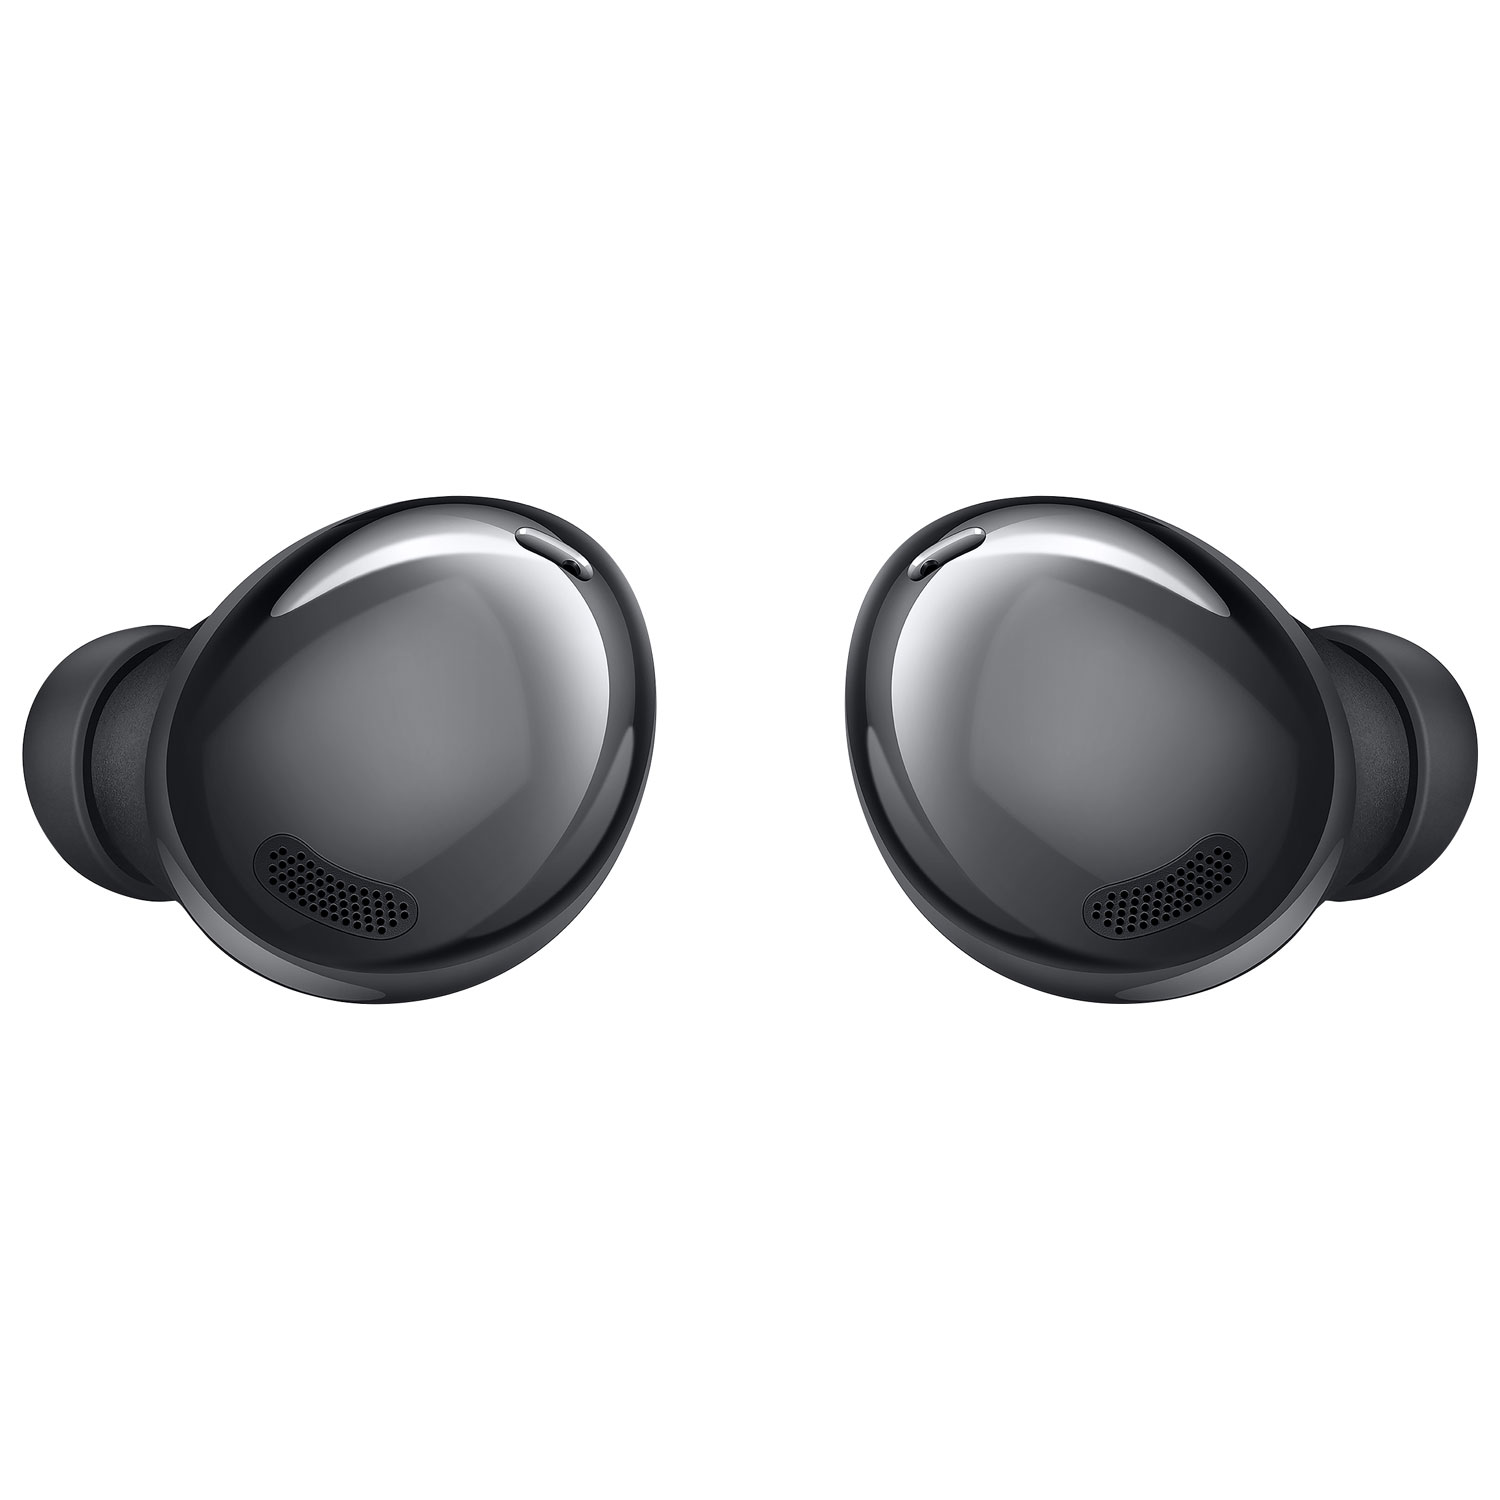 Samsung Galaxy Buds Pro In-Ear Noise Cancelling True Wireless Earbuds - Phantom Black